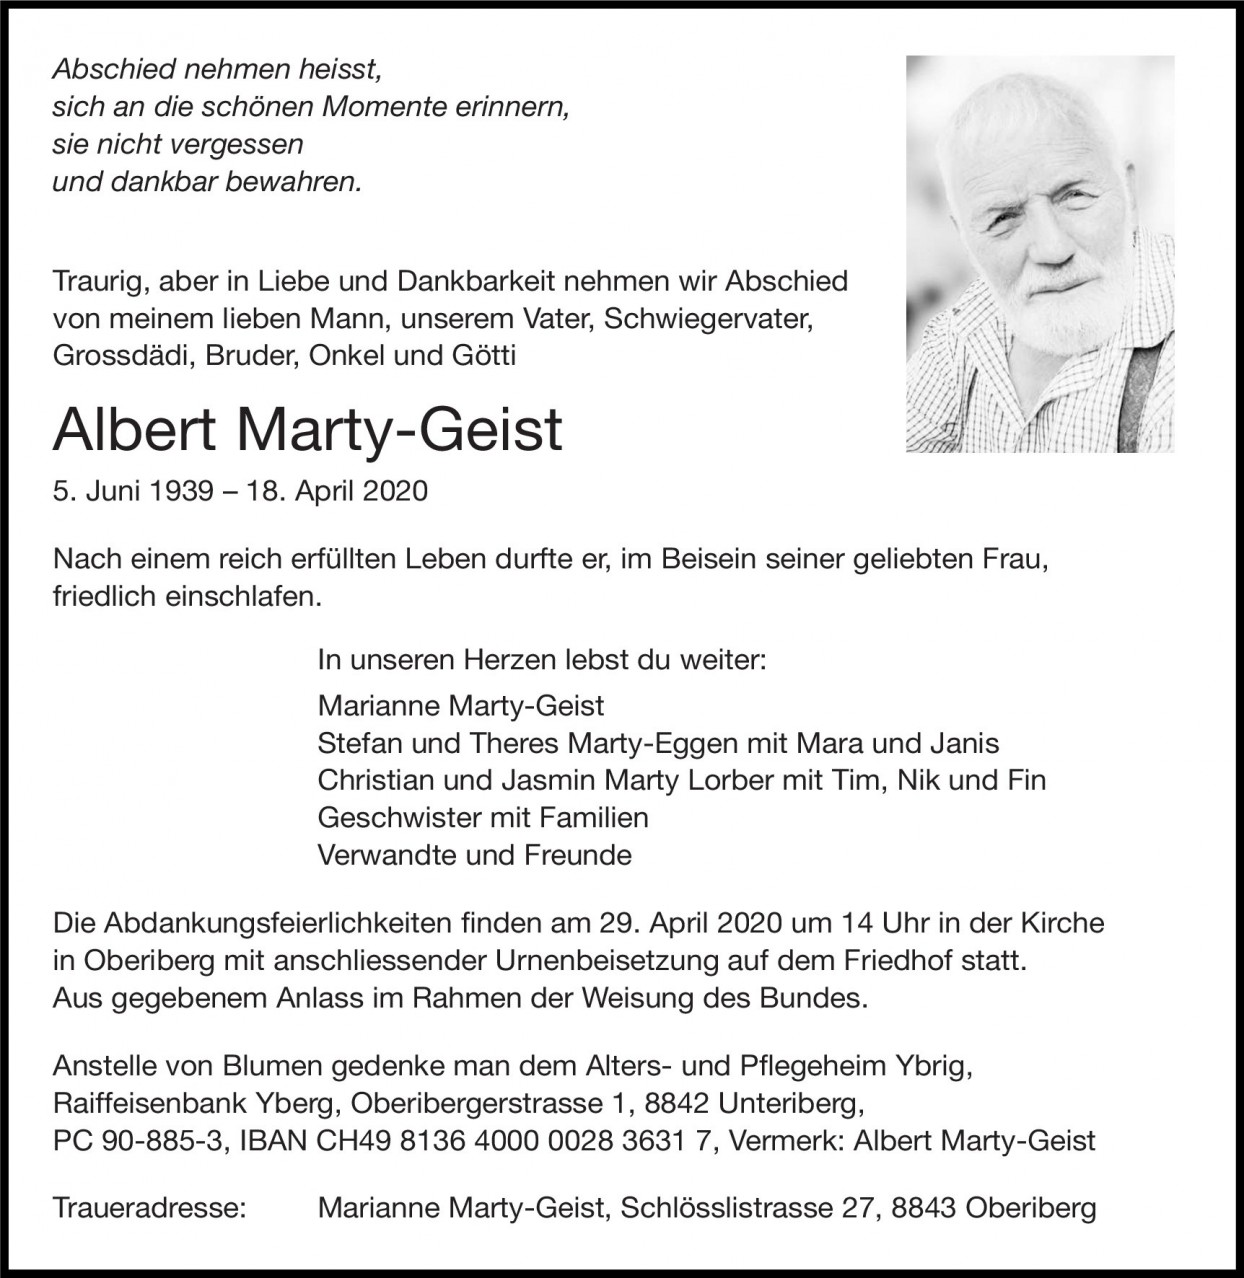 Albert Marty-Geist